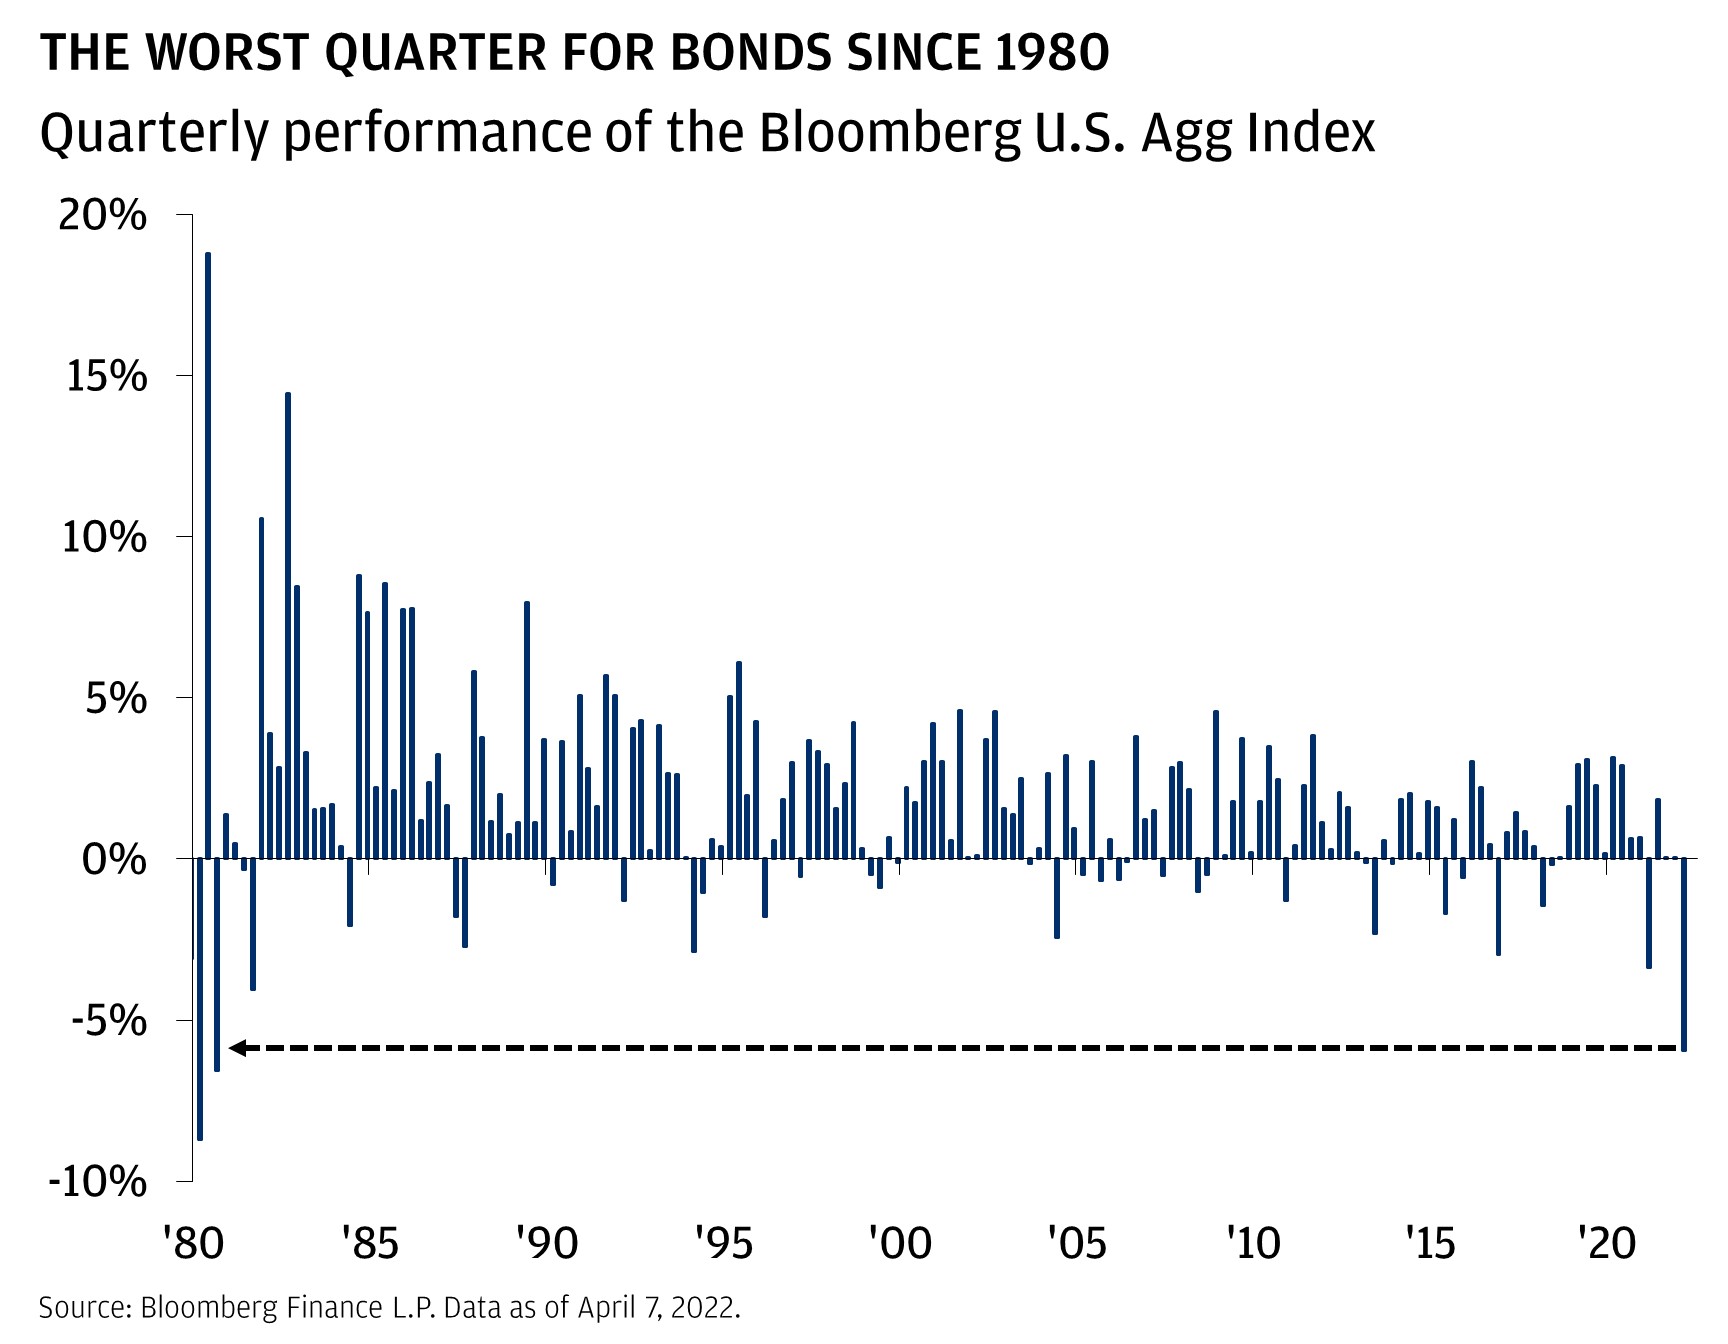 The worst quarter for bonds since 1980